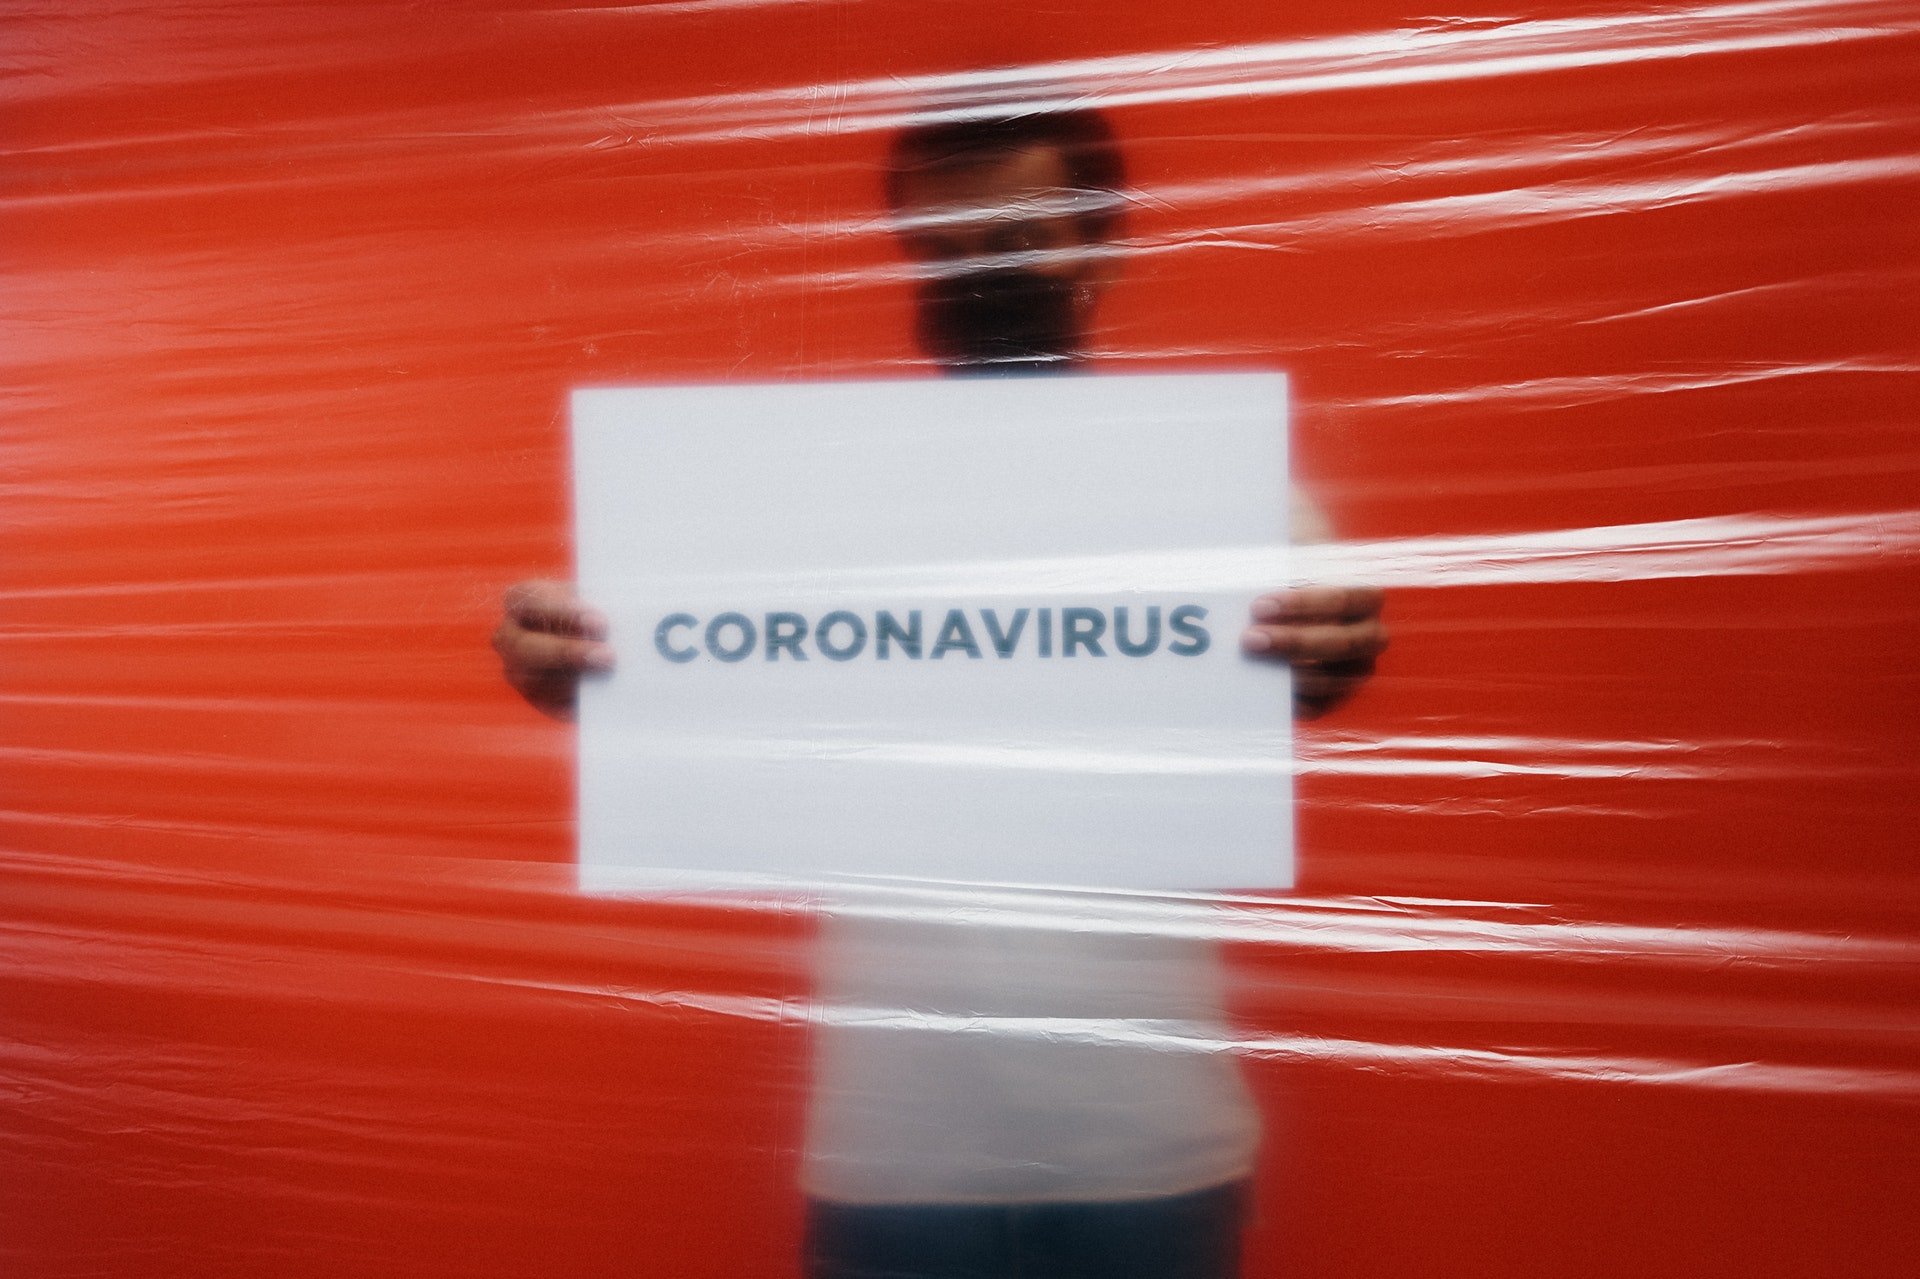 Coronavirus 2020 image | Photo : Pexels/cottonbro